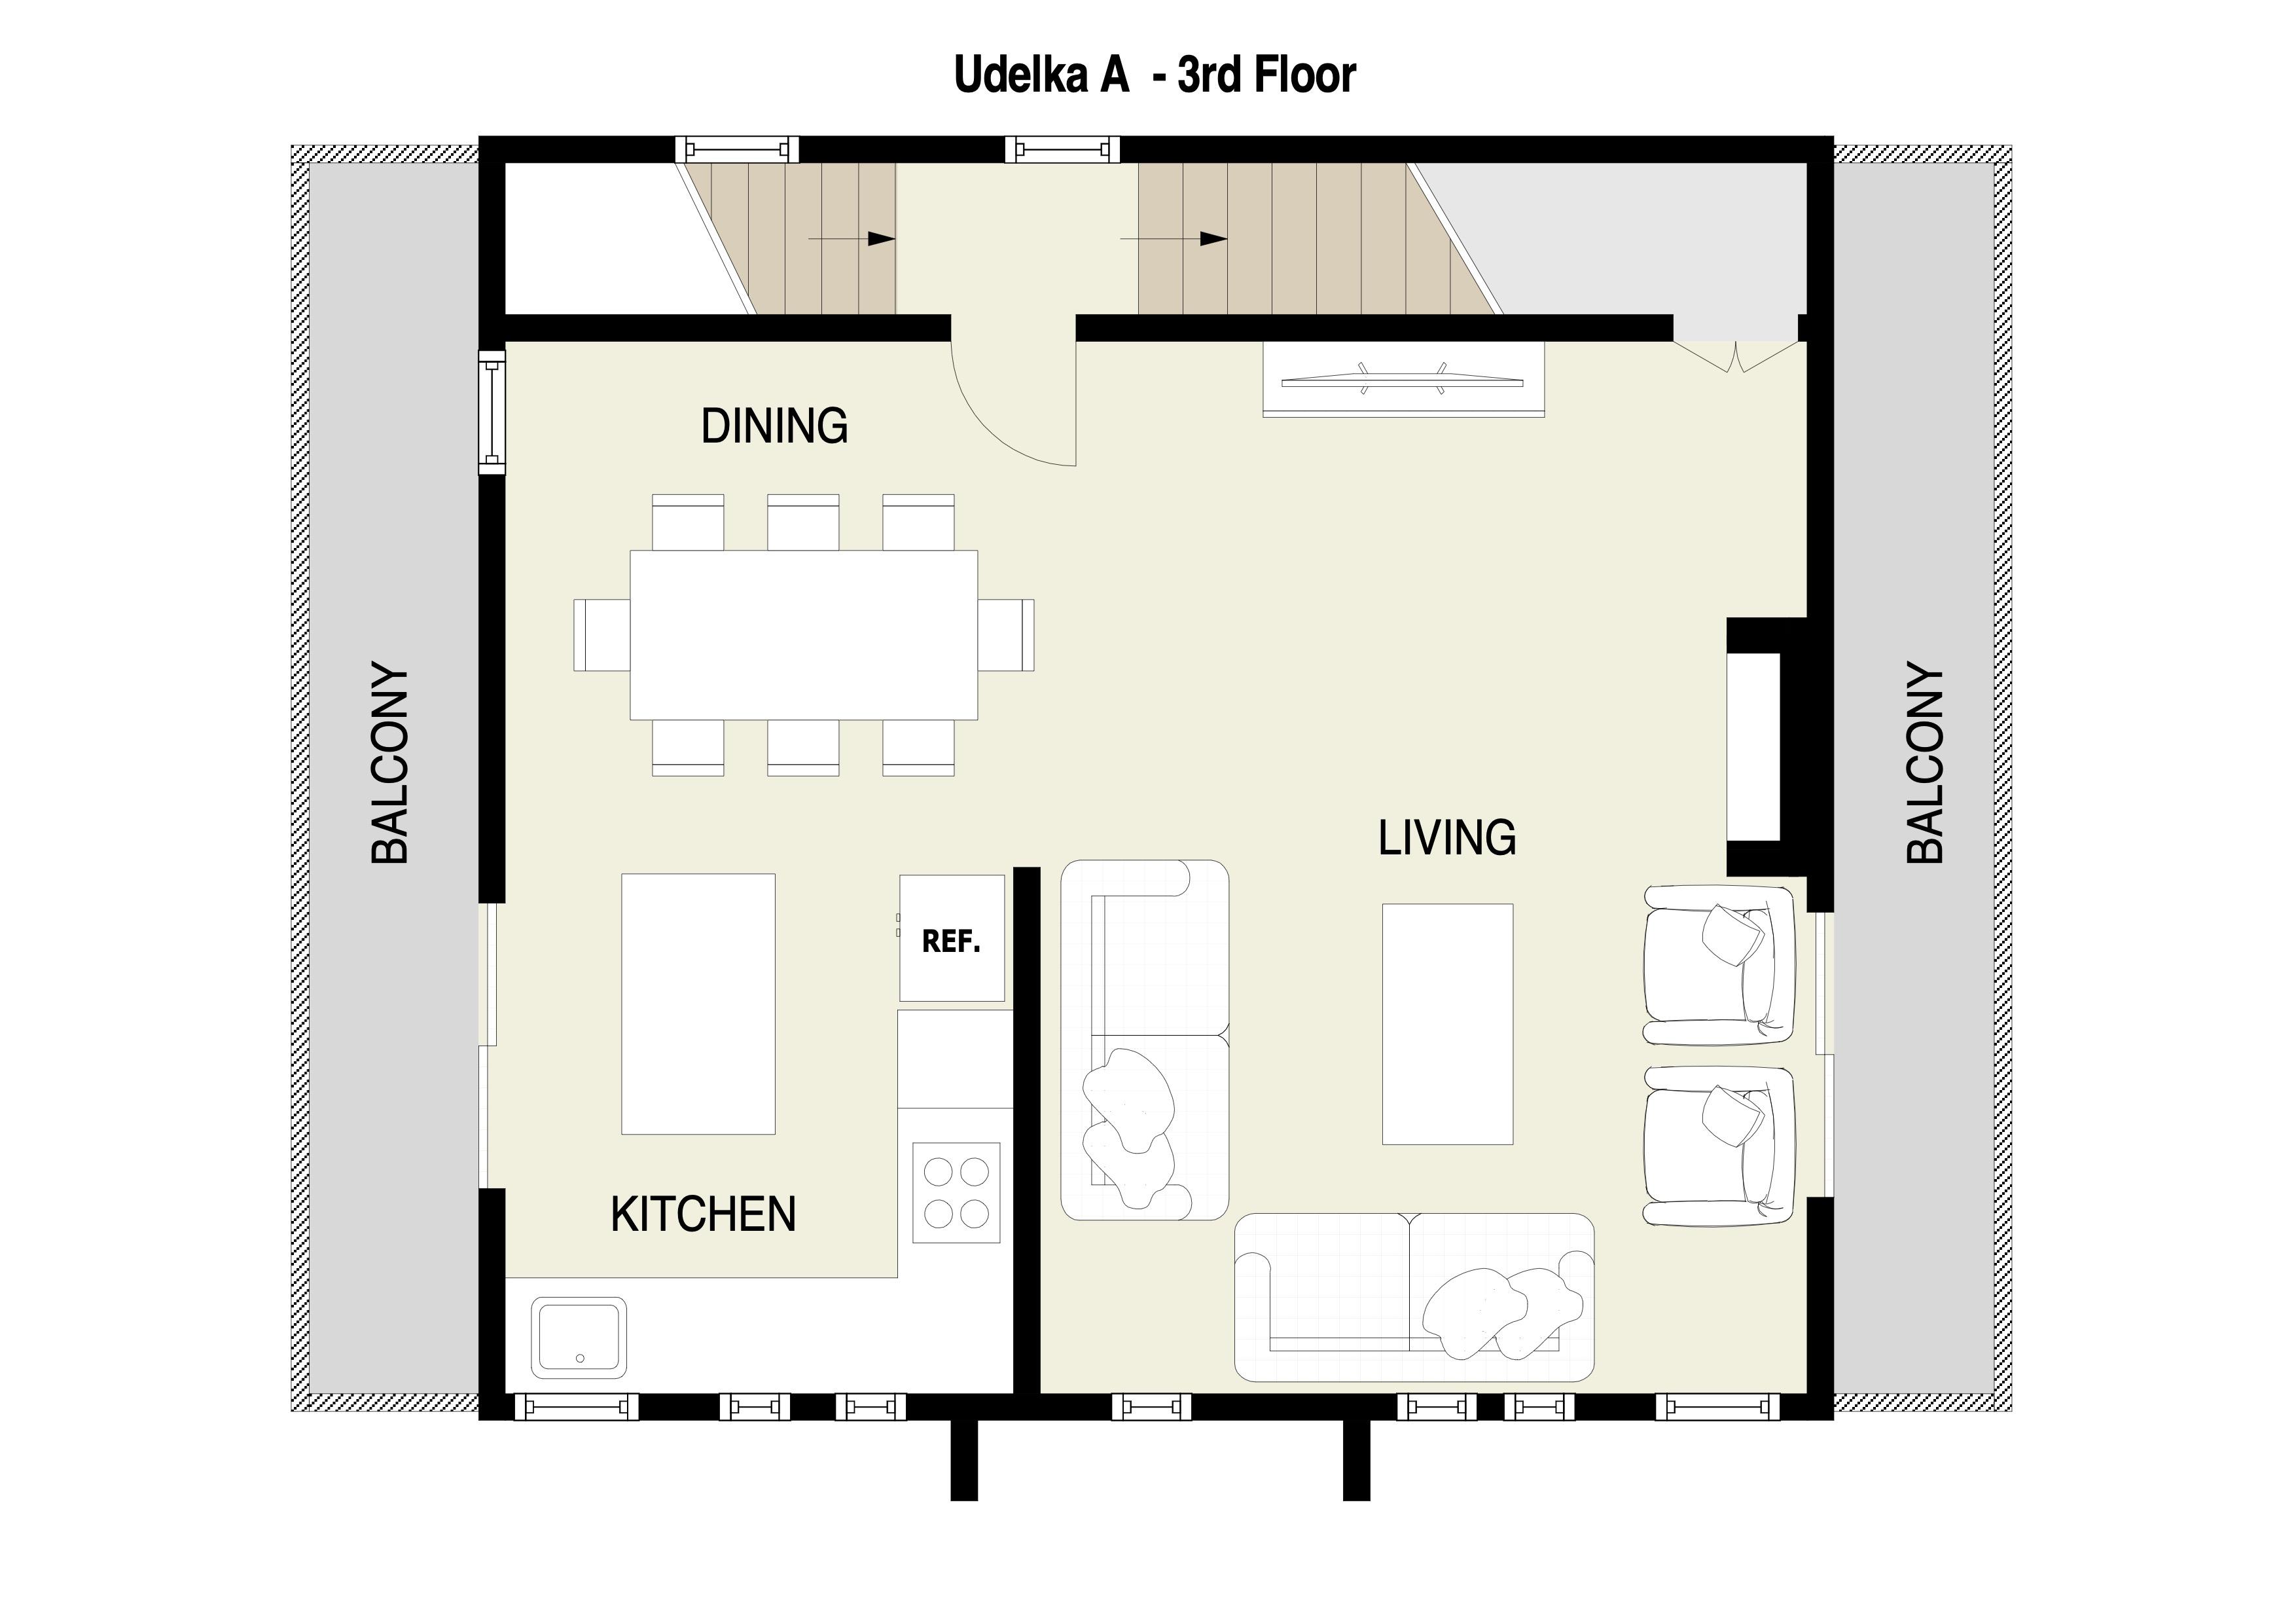 Udelka A  3rd Floor plans